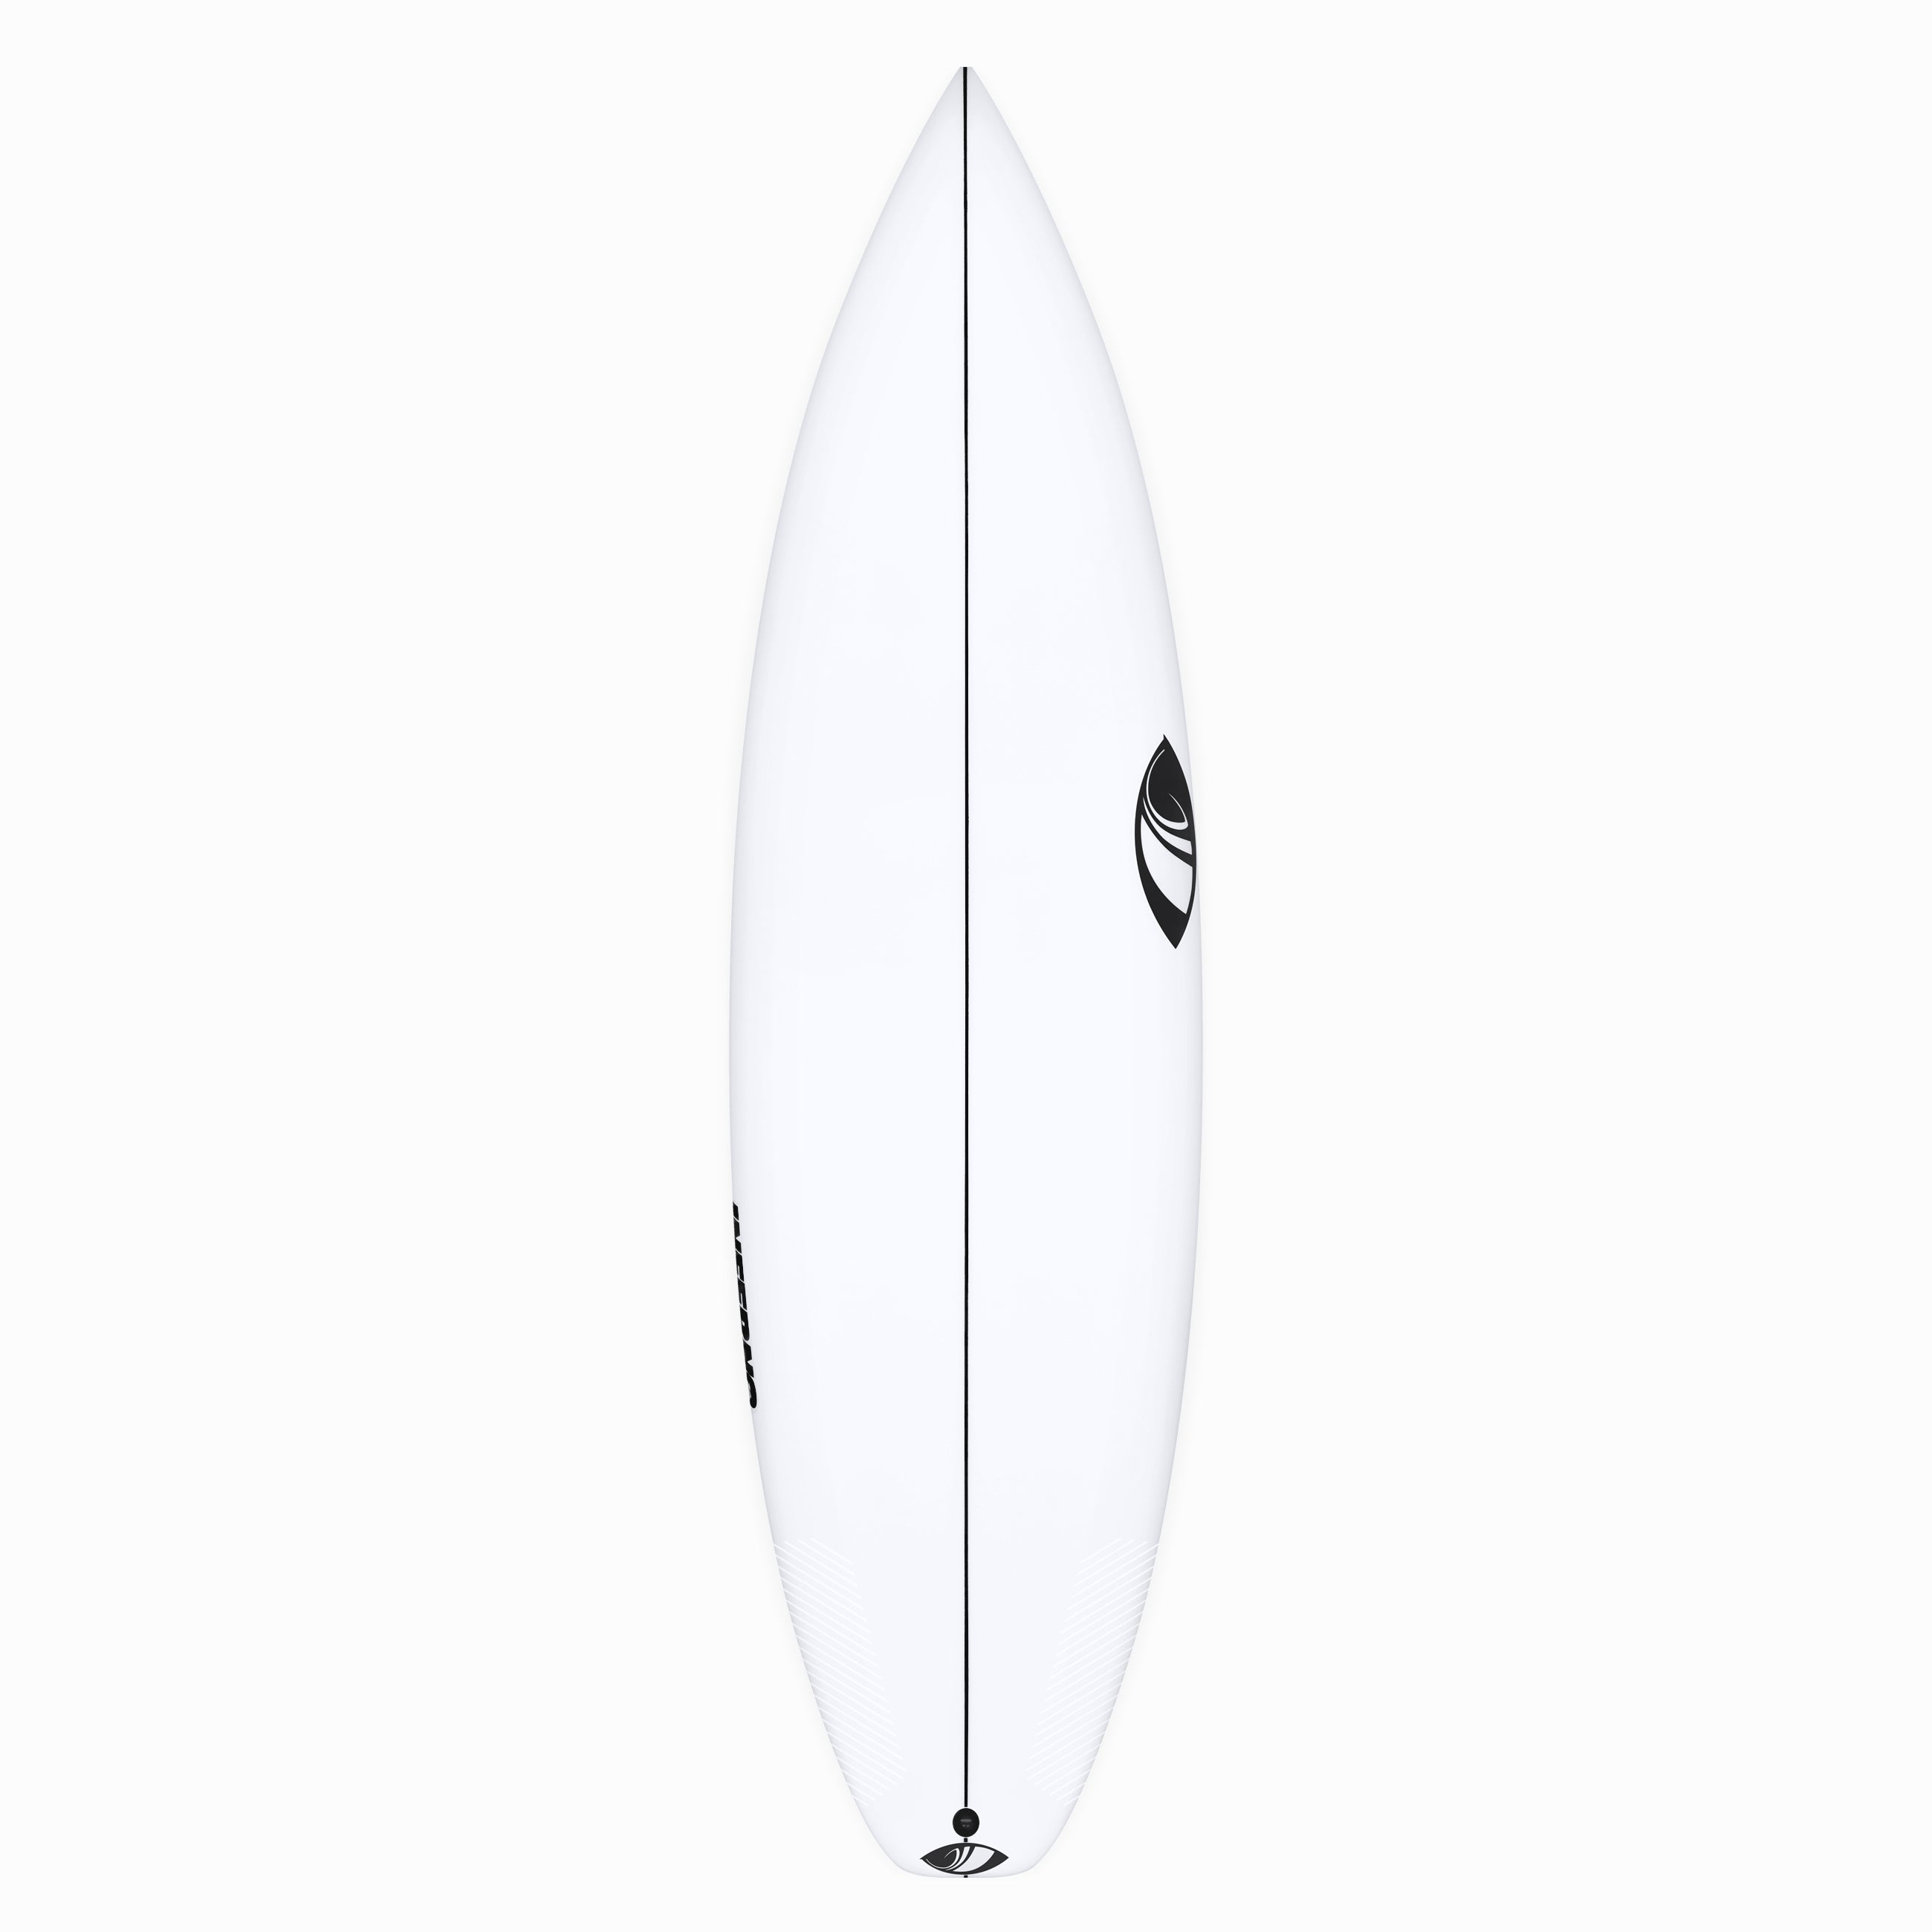 INFERNO 72 Surfboard | Sharp Eye Surfboards